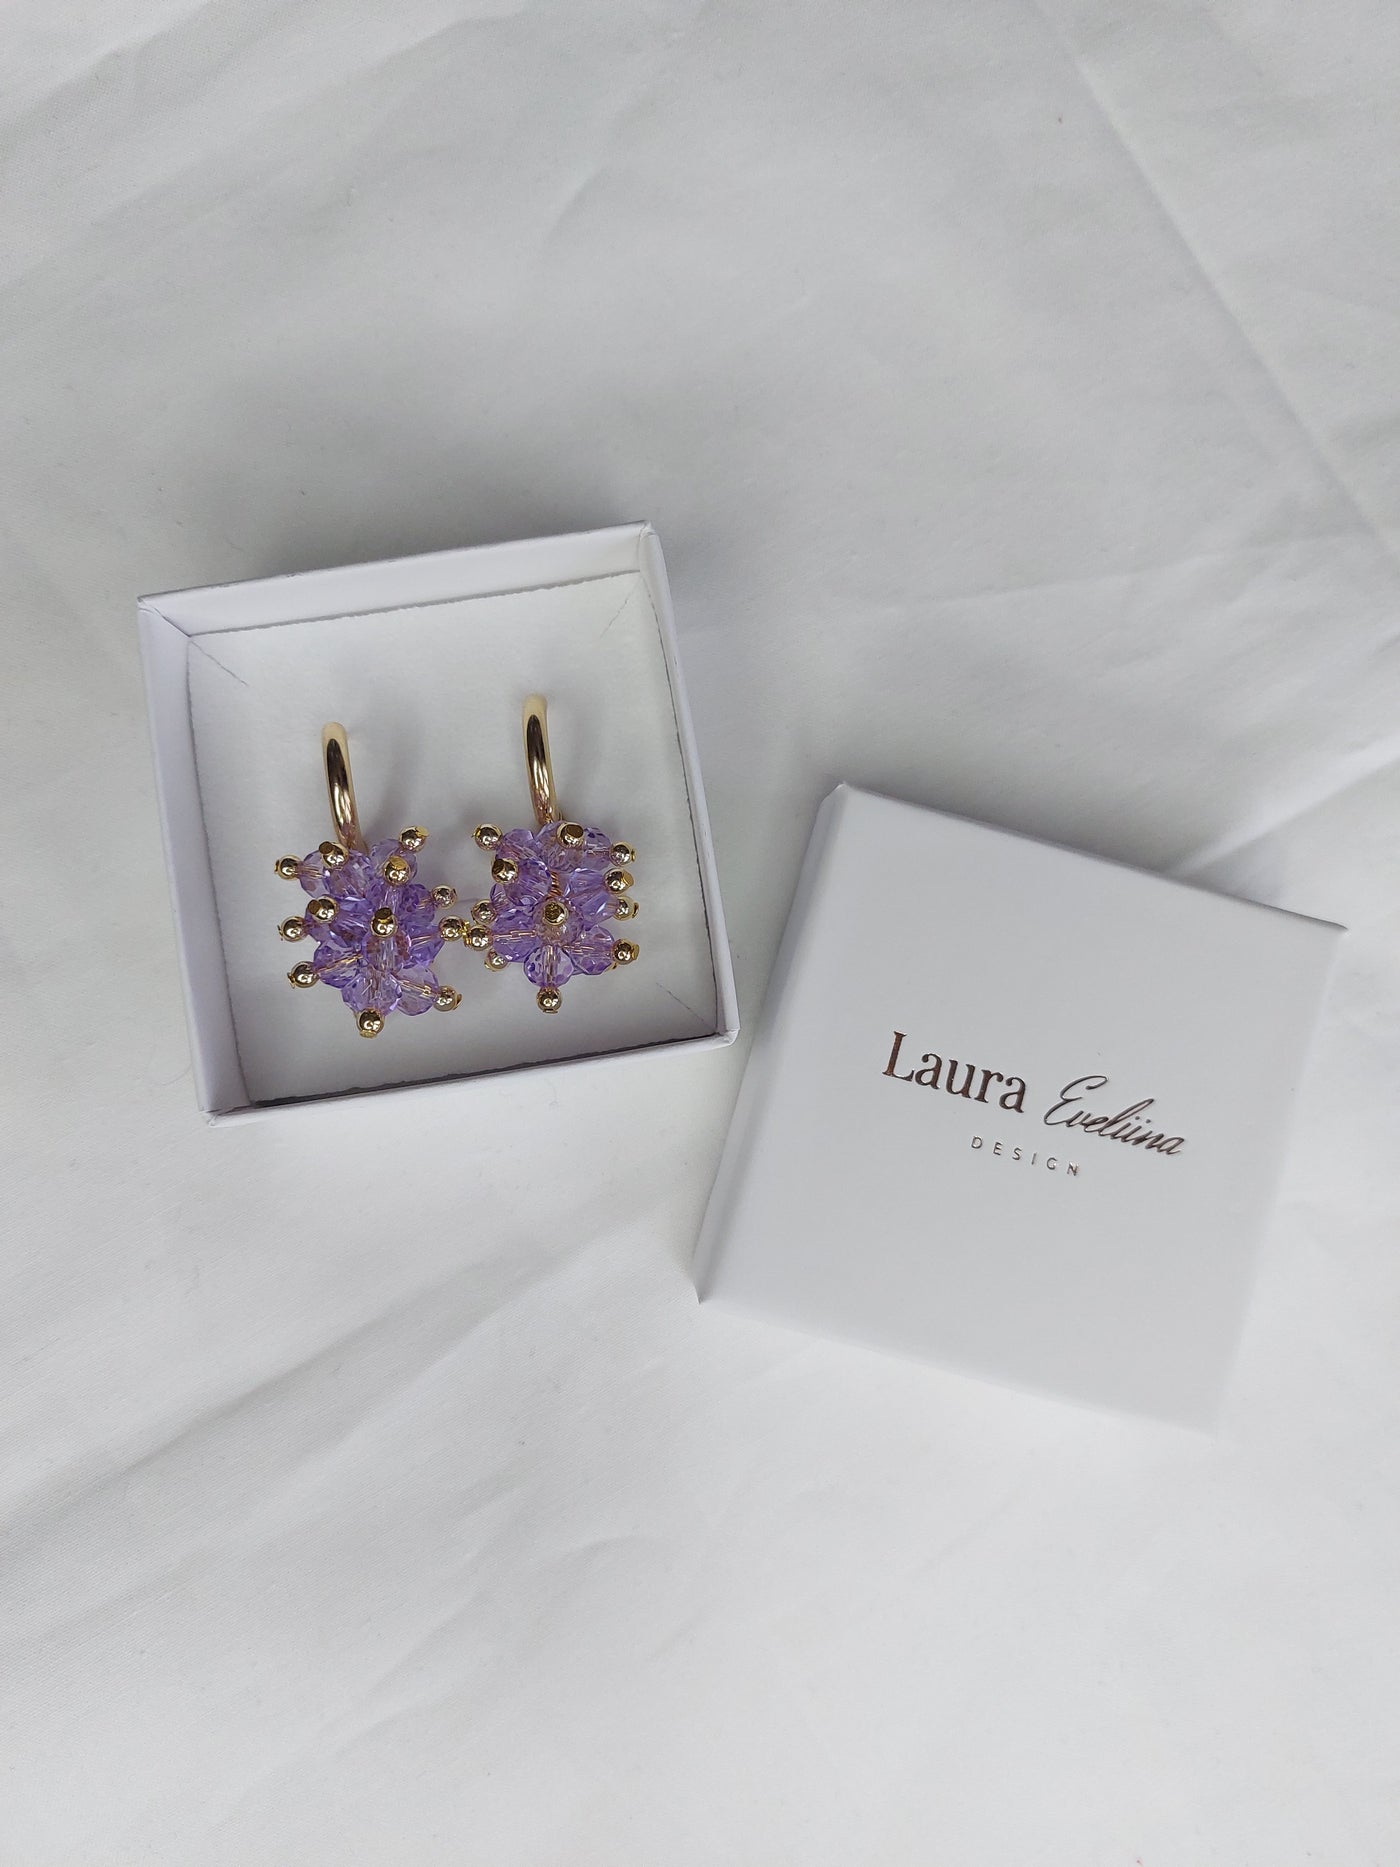 Laura Eveliina Design, Iso, Pure Lavender